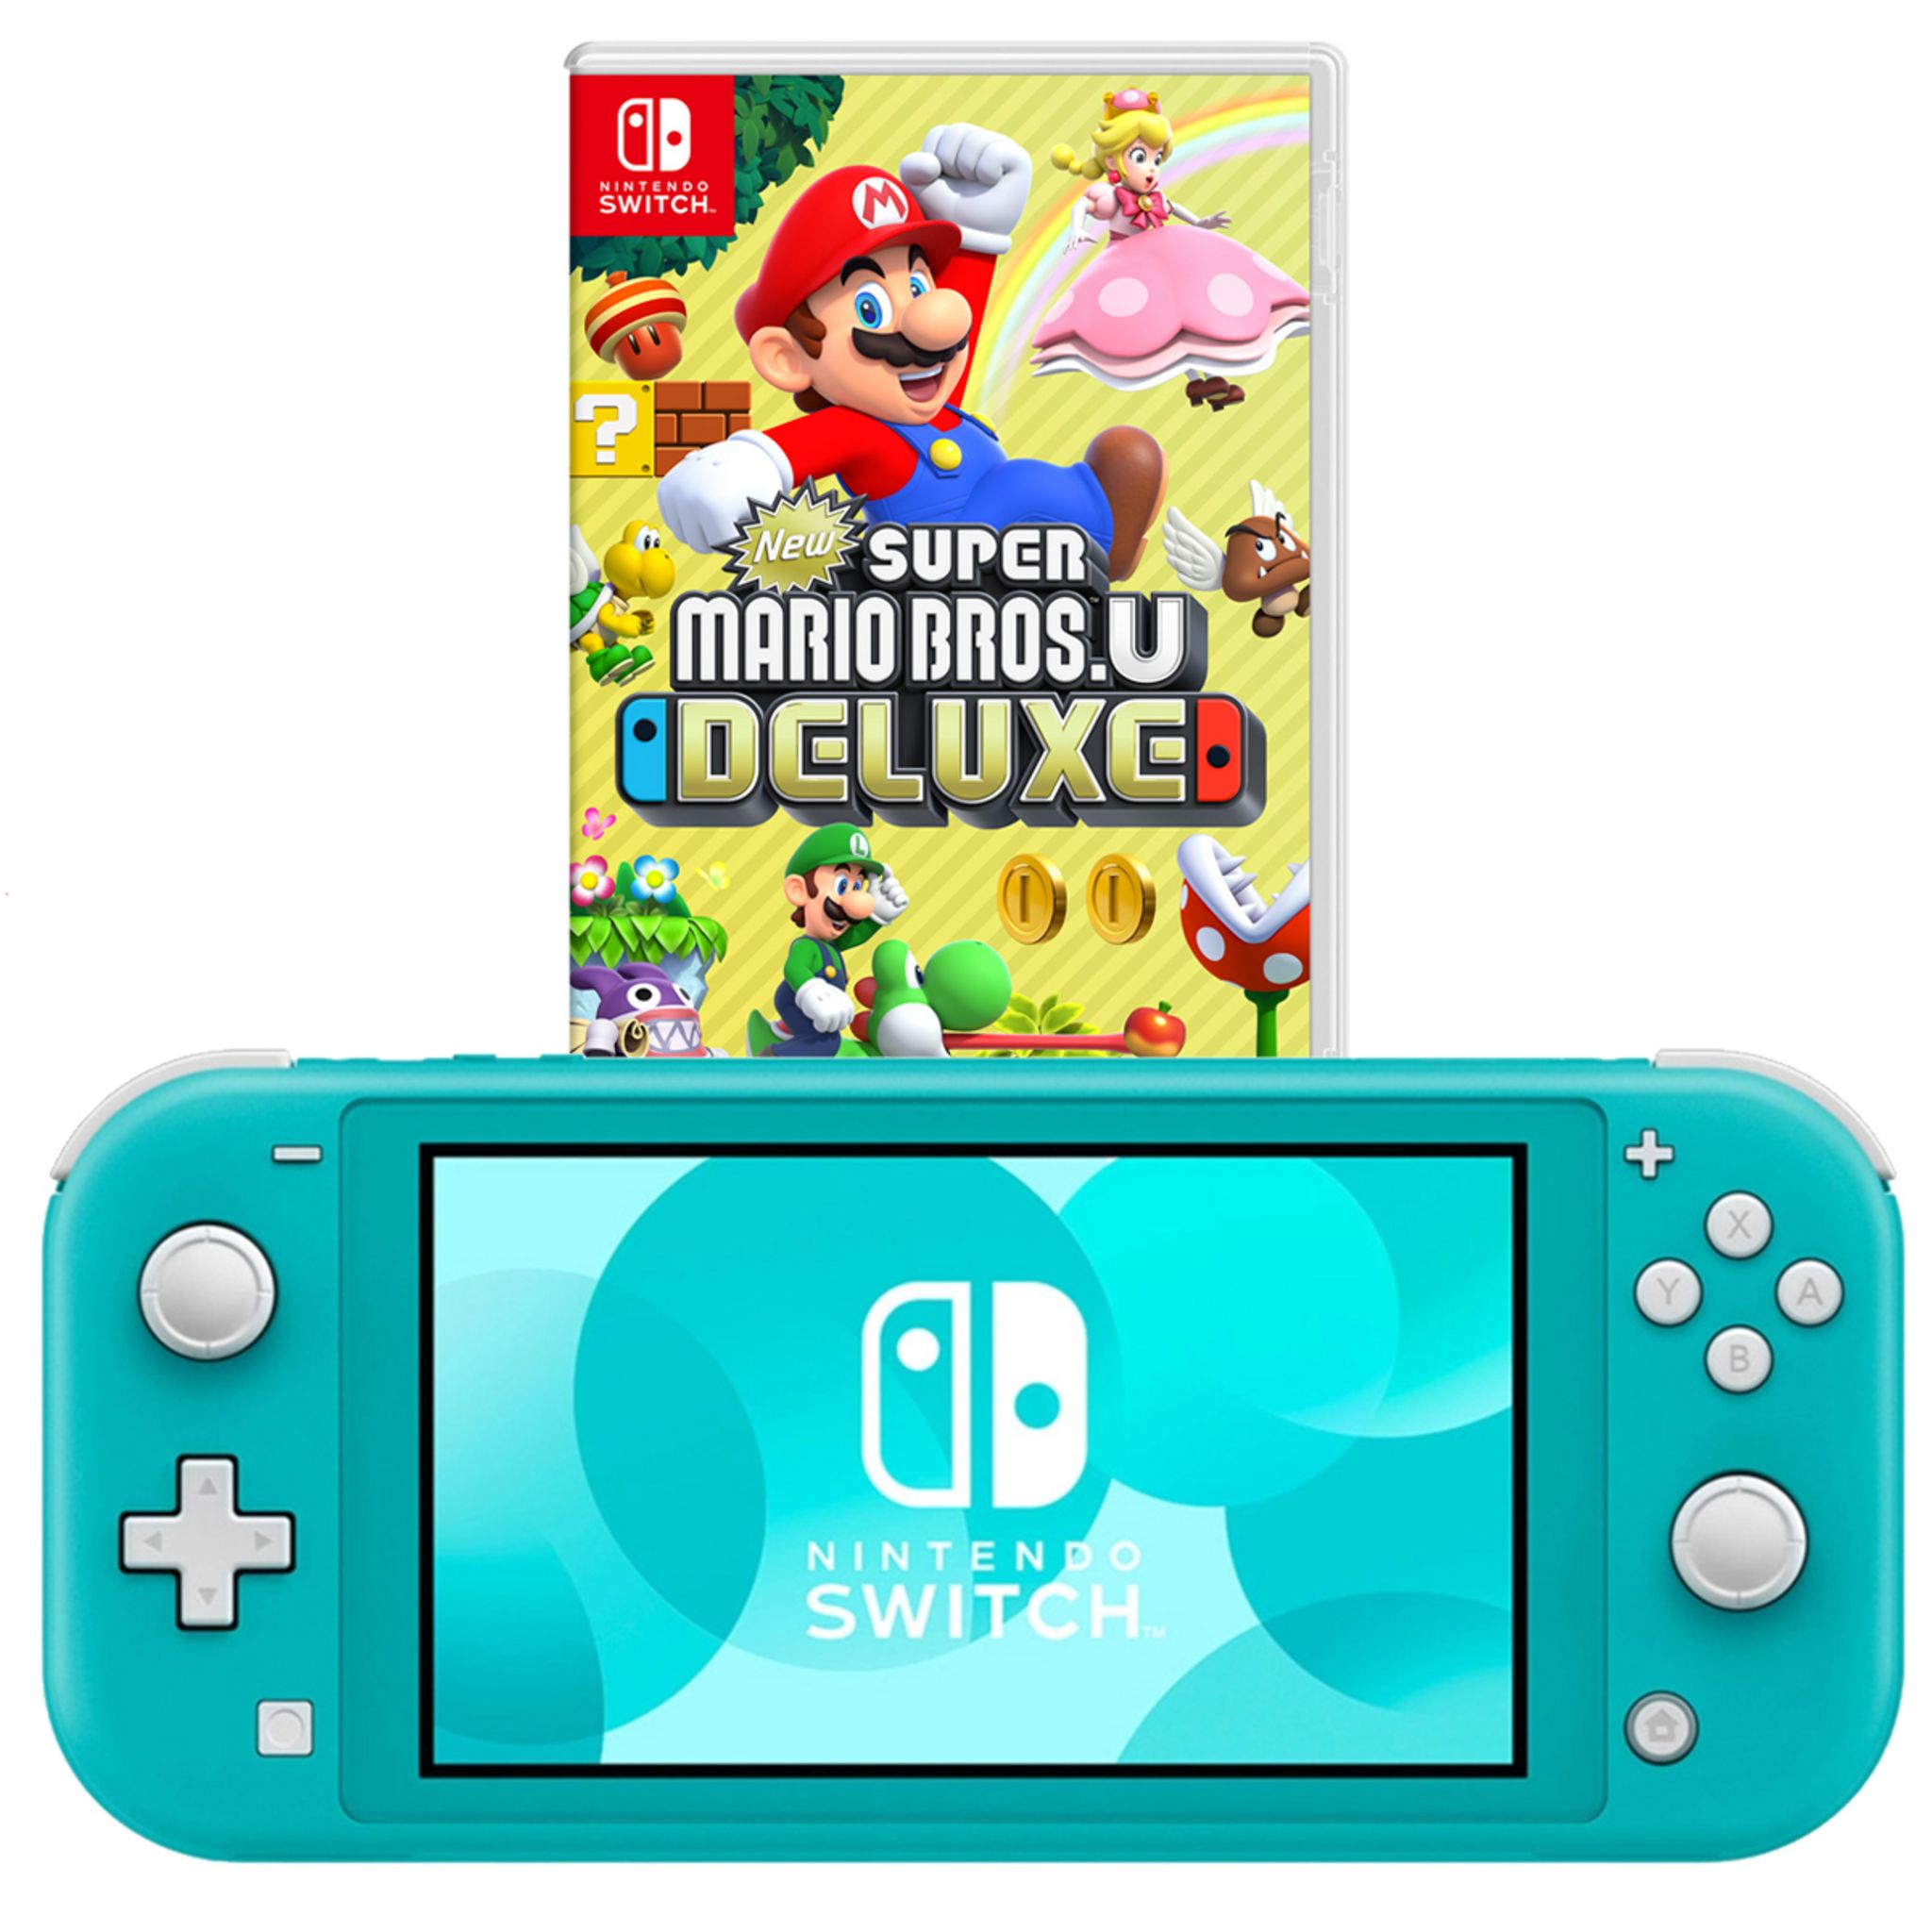 Console de jeux Portable Super Mario Bros